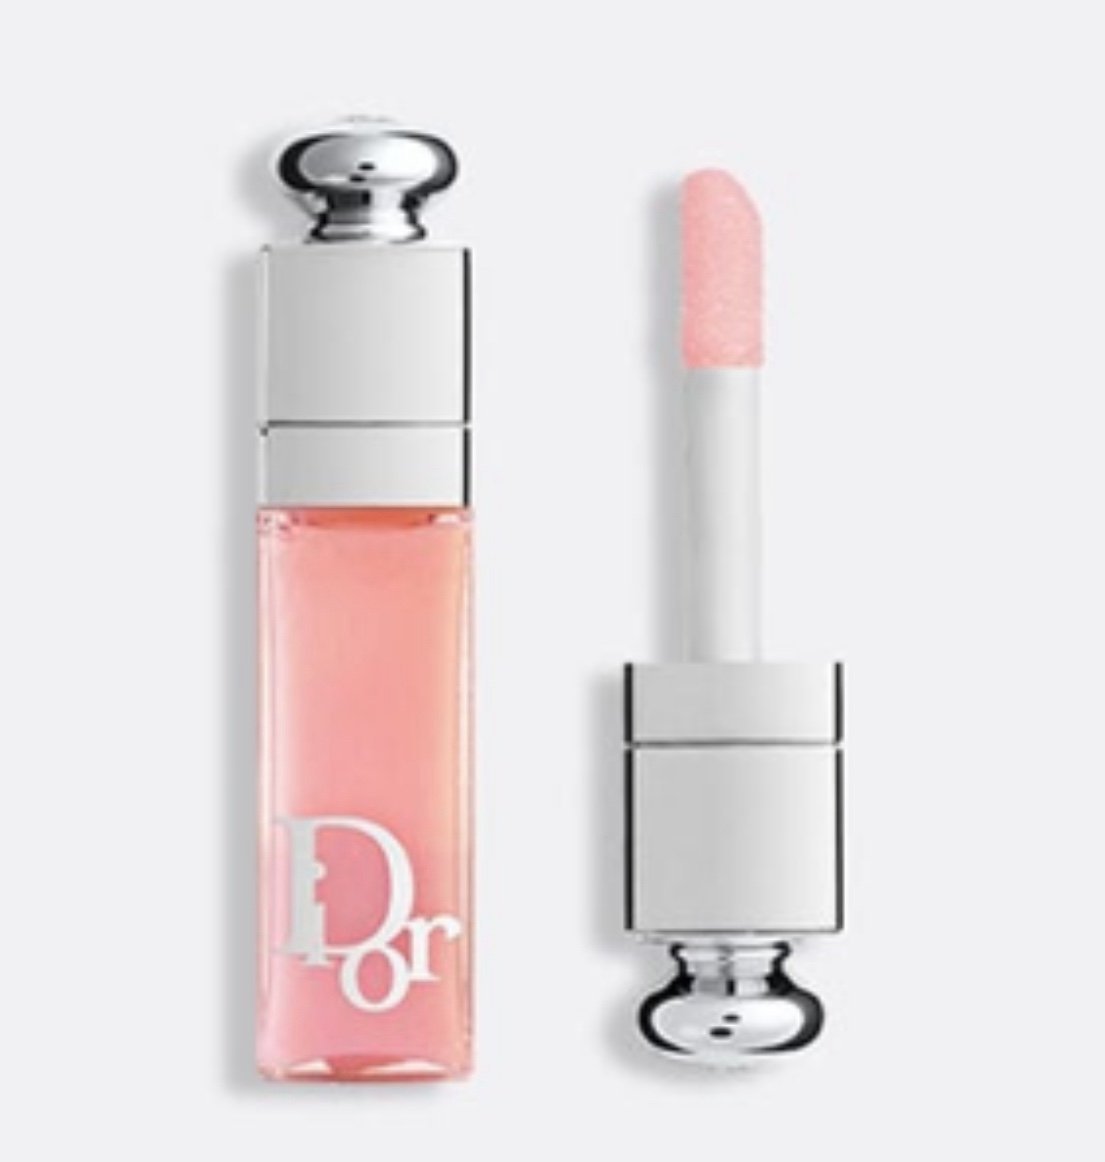 Dior denim makeup pouch, mini lip maximizer and mascara set bundle D6EbAewCv